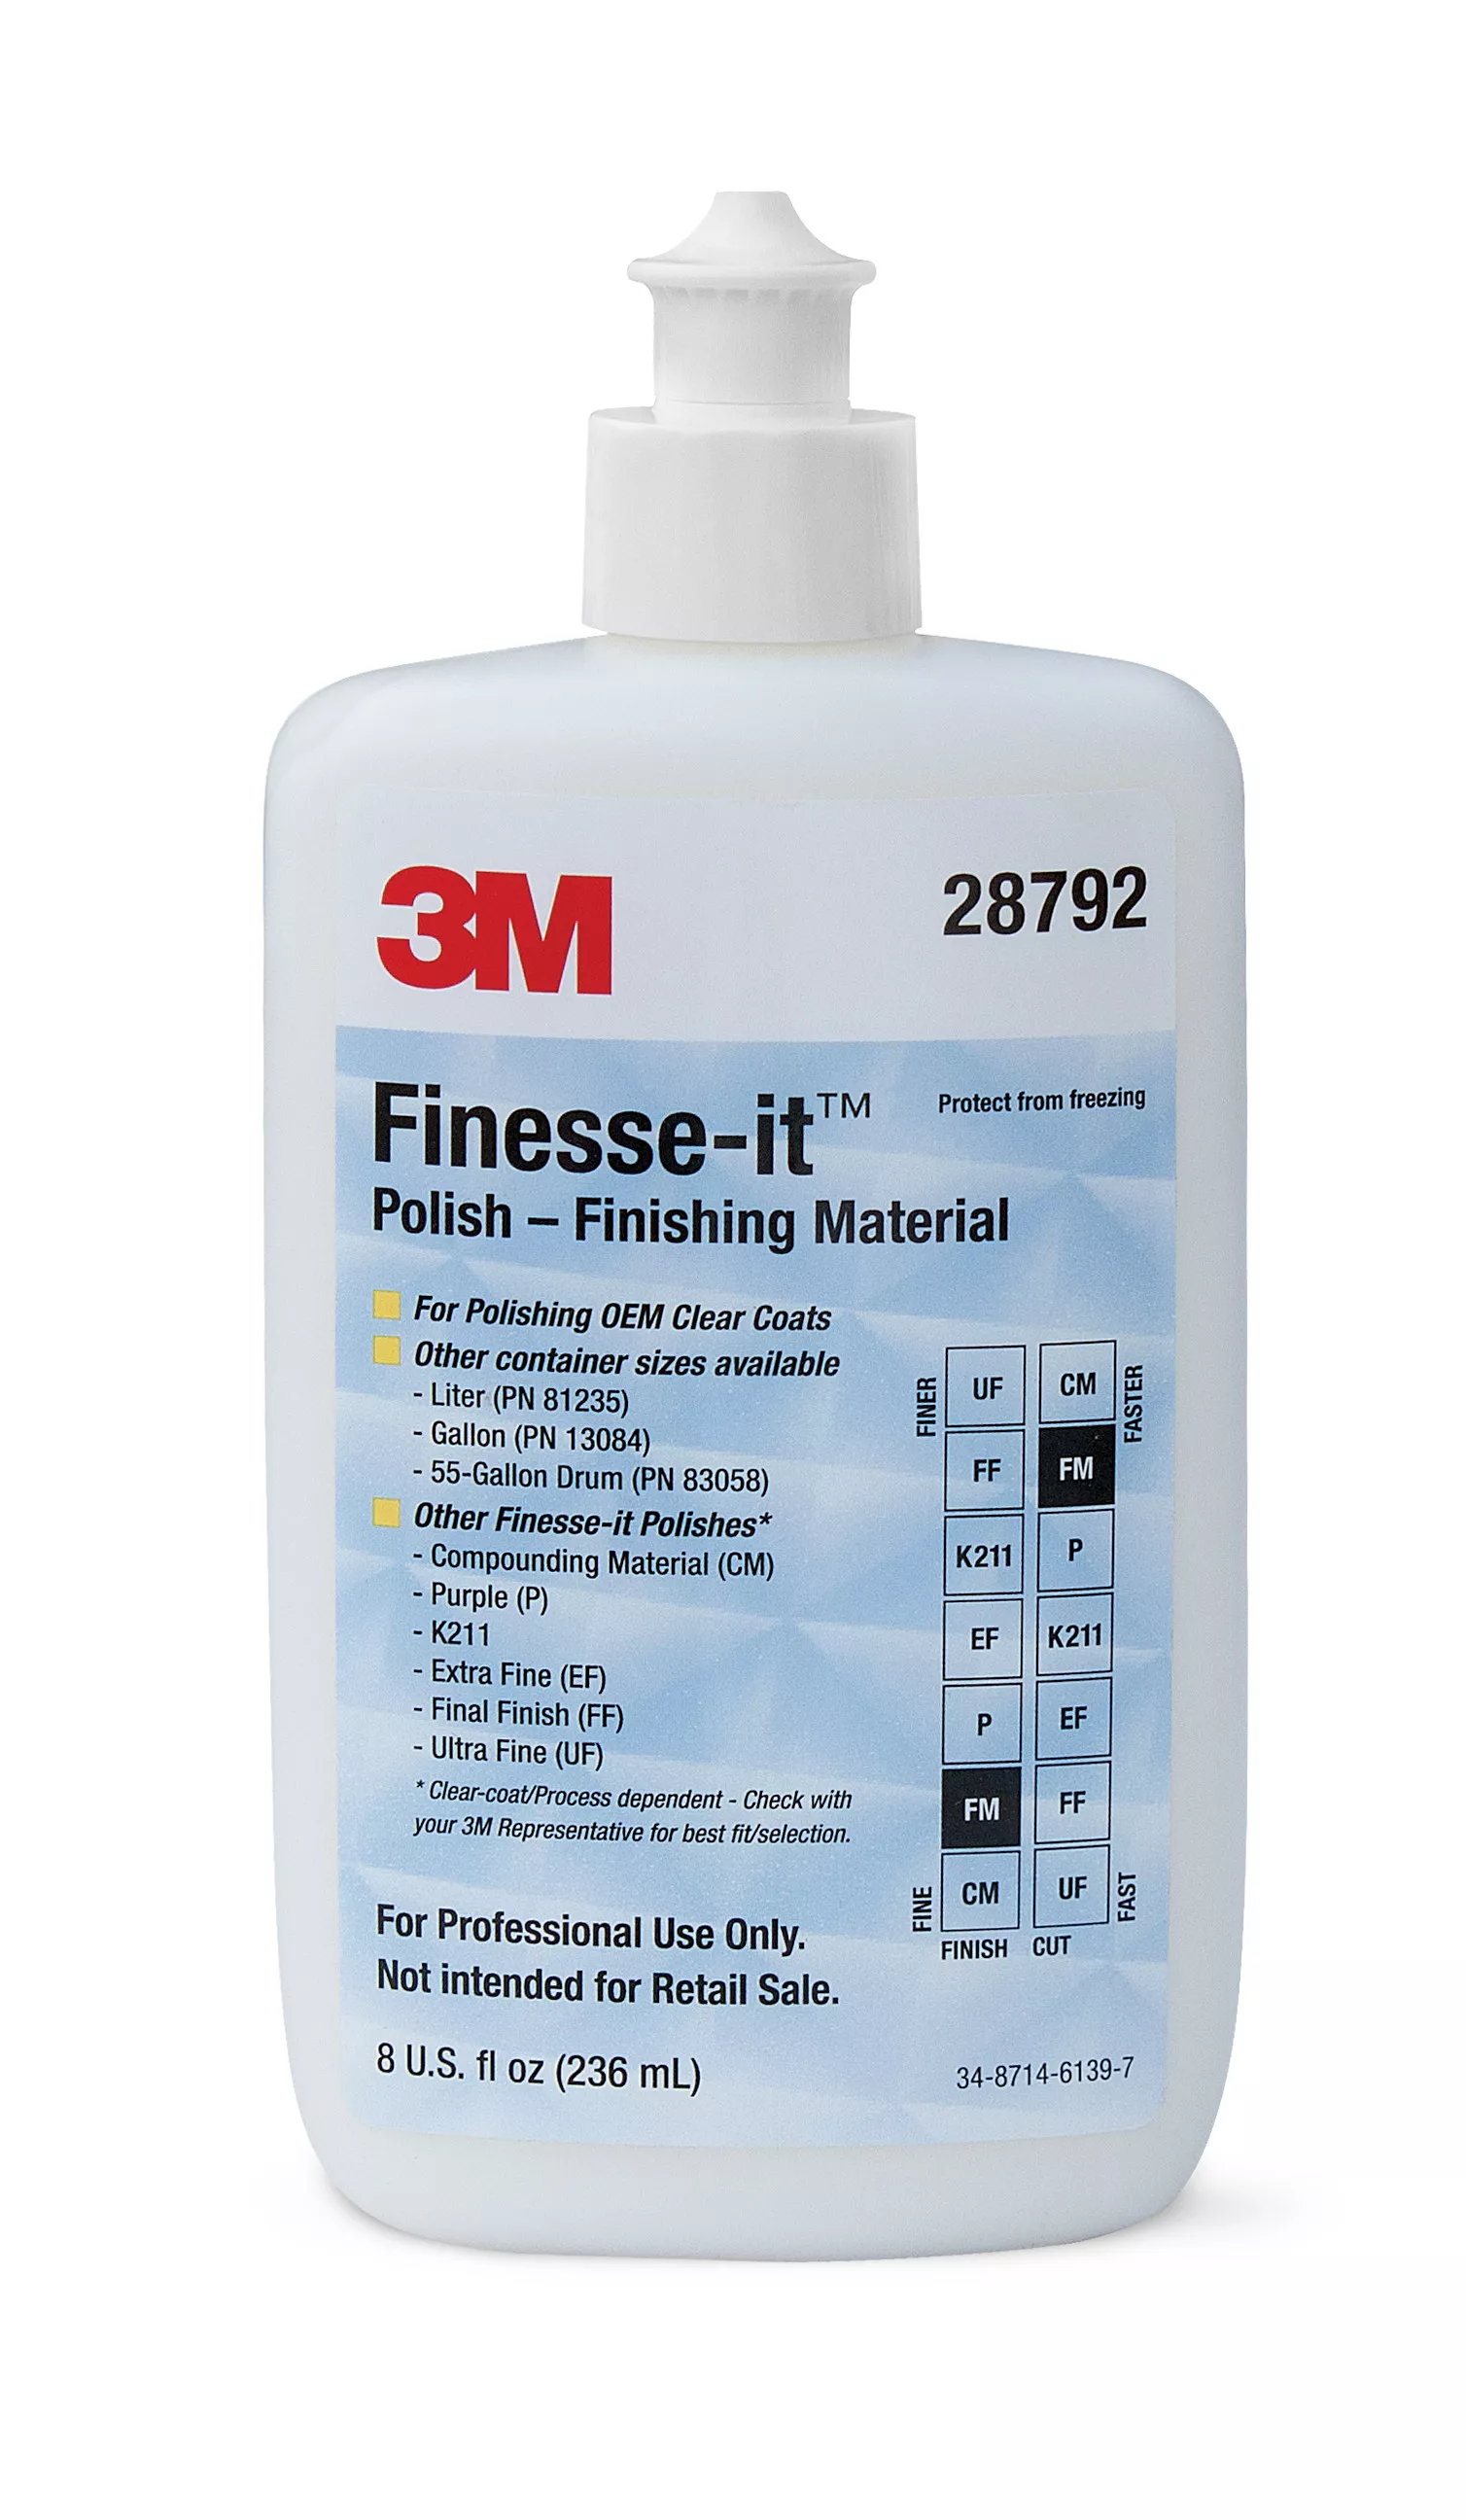 3M™ Finesse-it™ Polish Standard Series - Finishing Material (140),
28792, White, 8 oz, 4 ea/Case